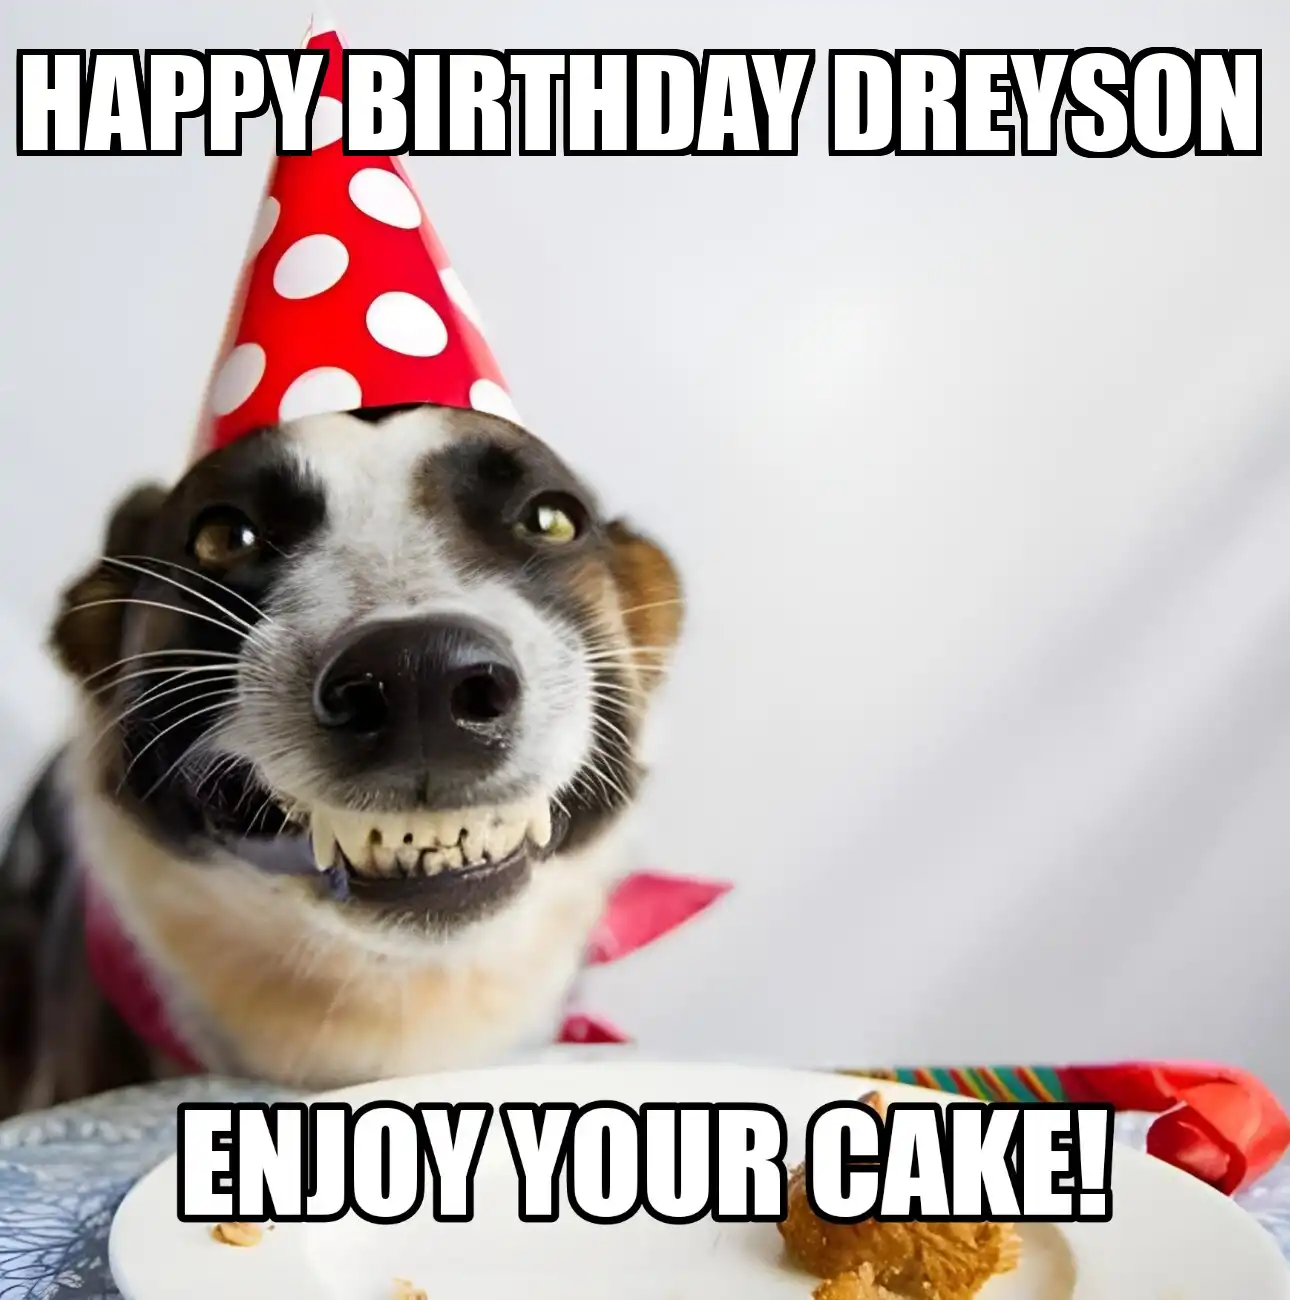 Happy Birthday Dreyson Enjoy Your Cake Dog Meme